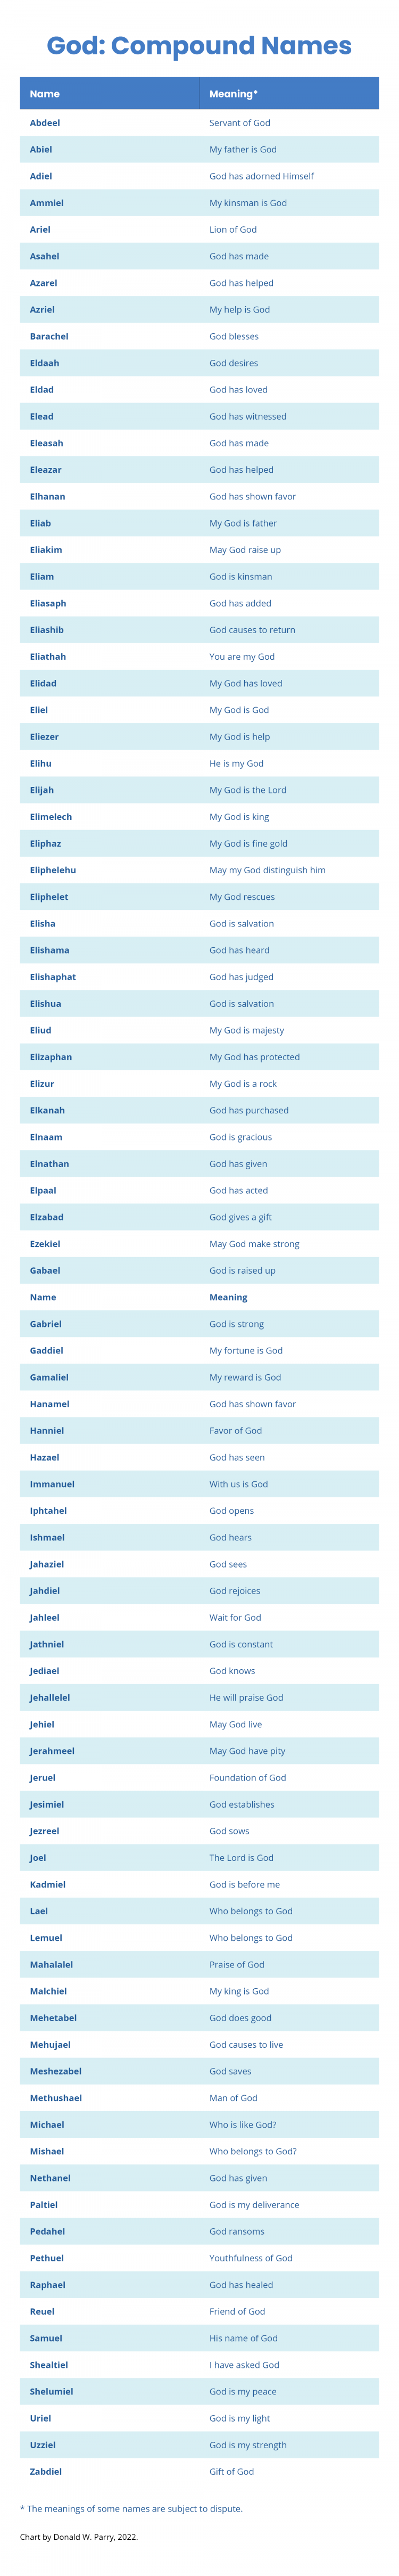 Chart by Donald W. Parry. God: Compound Names.